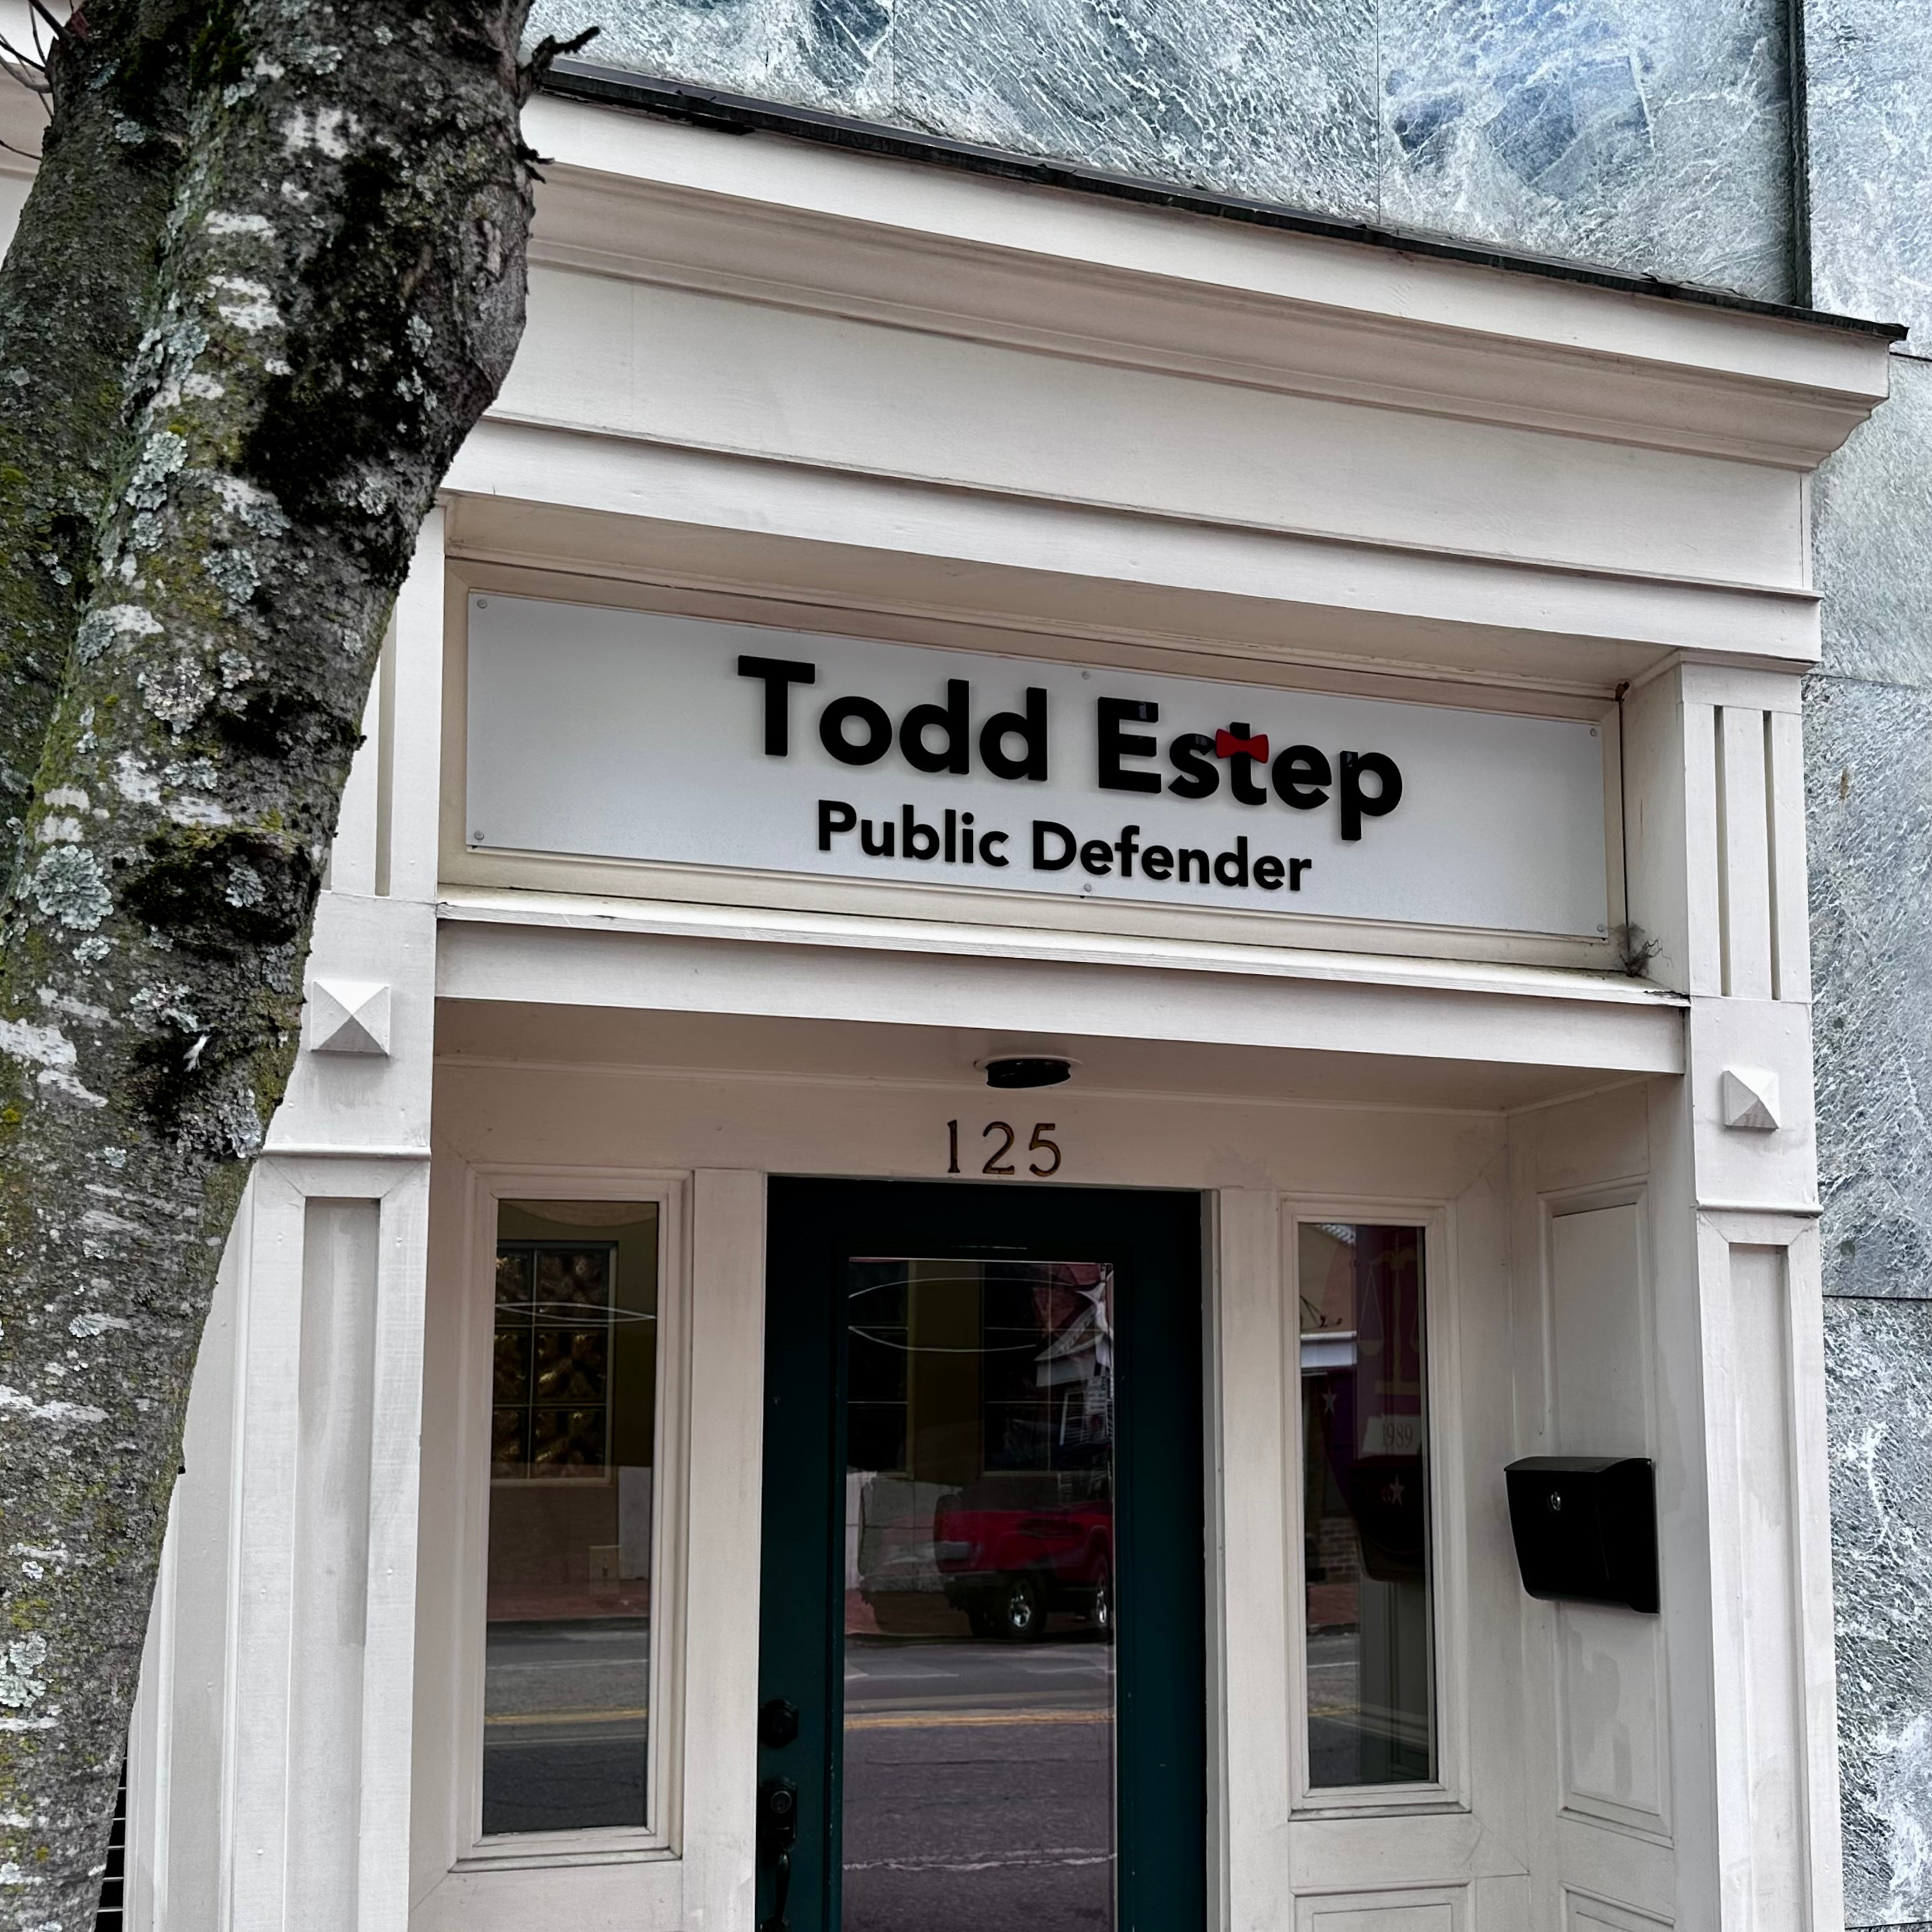 Todd Estep sign